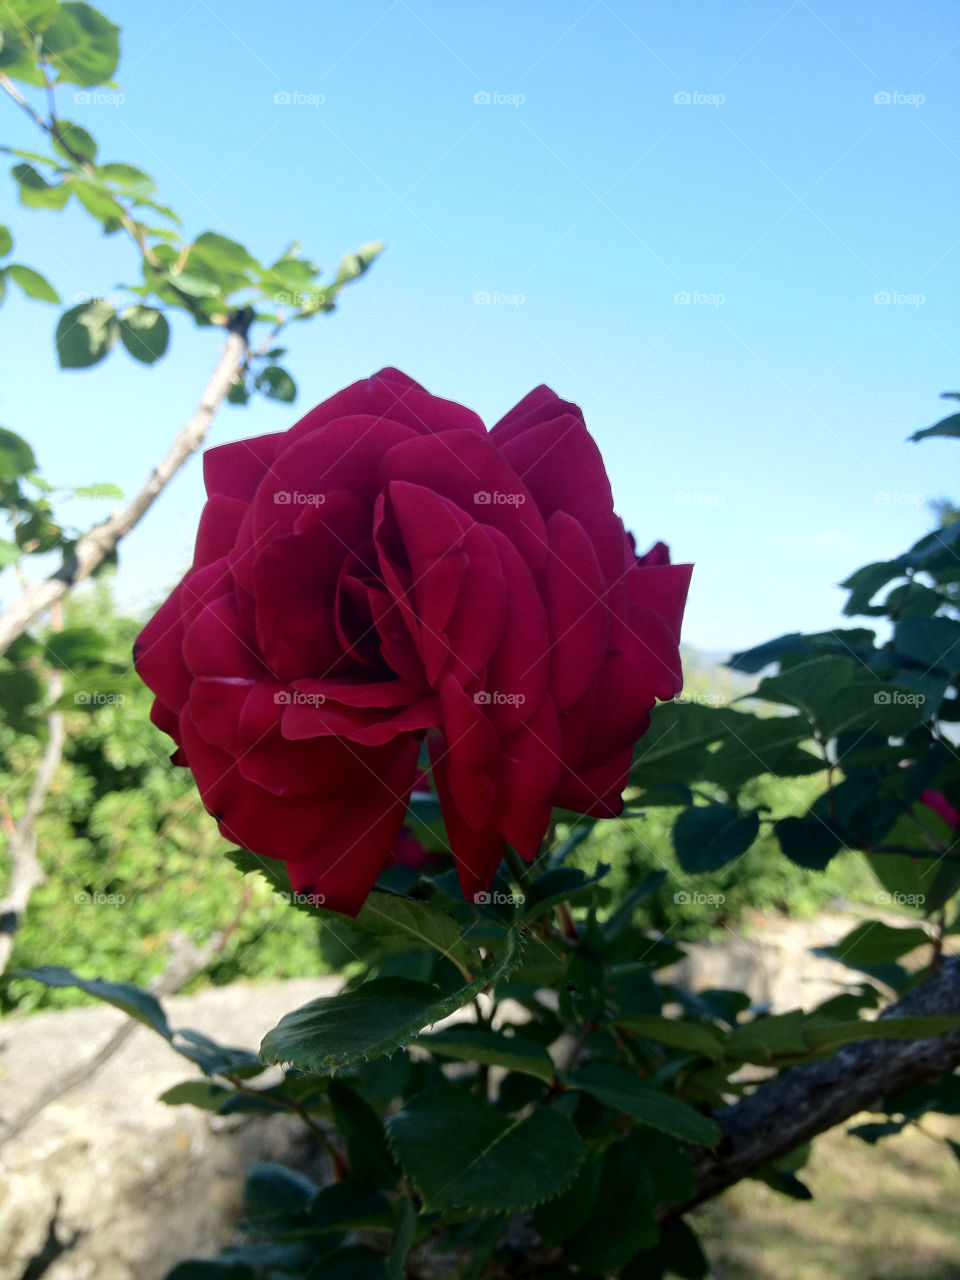 italy flower petal rose by louisit